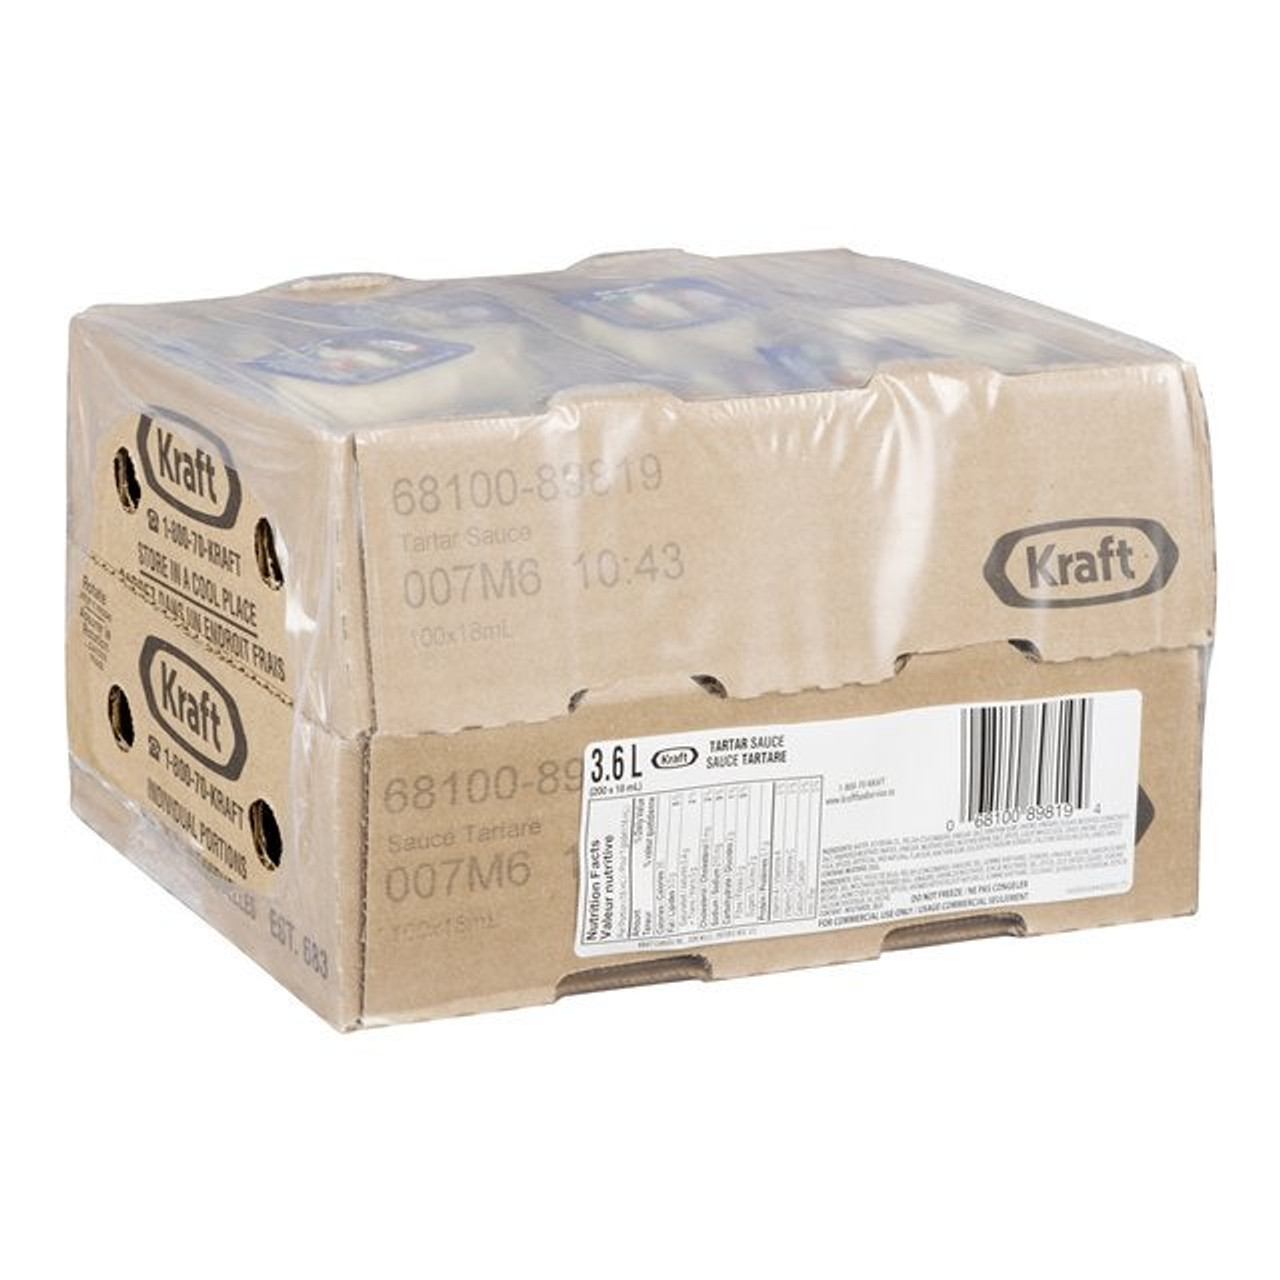 Kraft Tartar Sauce, Portion | 18ML/Unit, 200 Units/Case